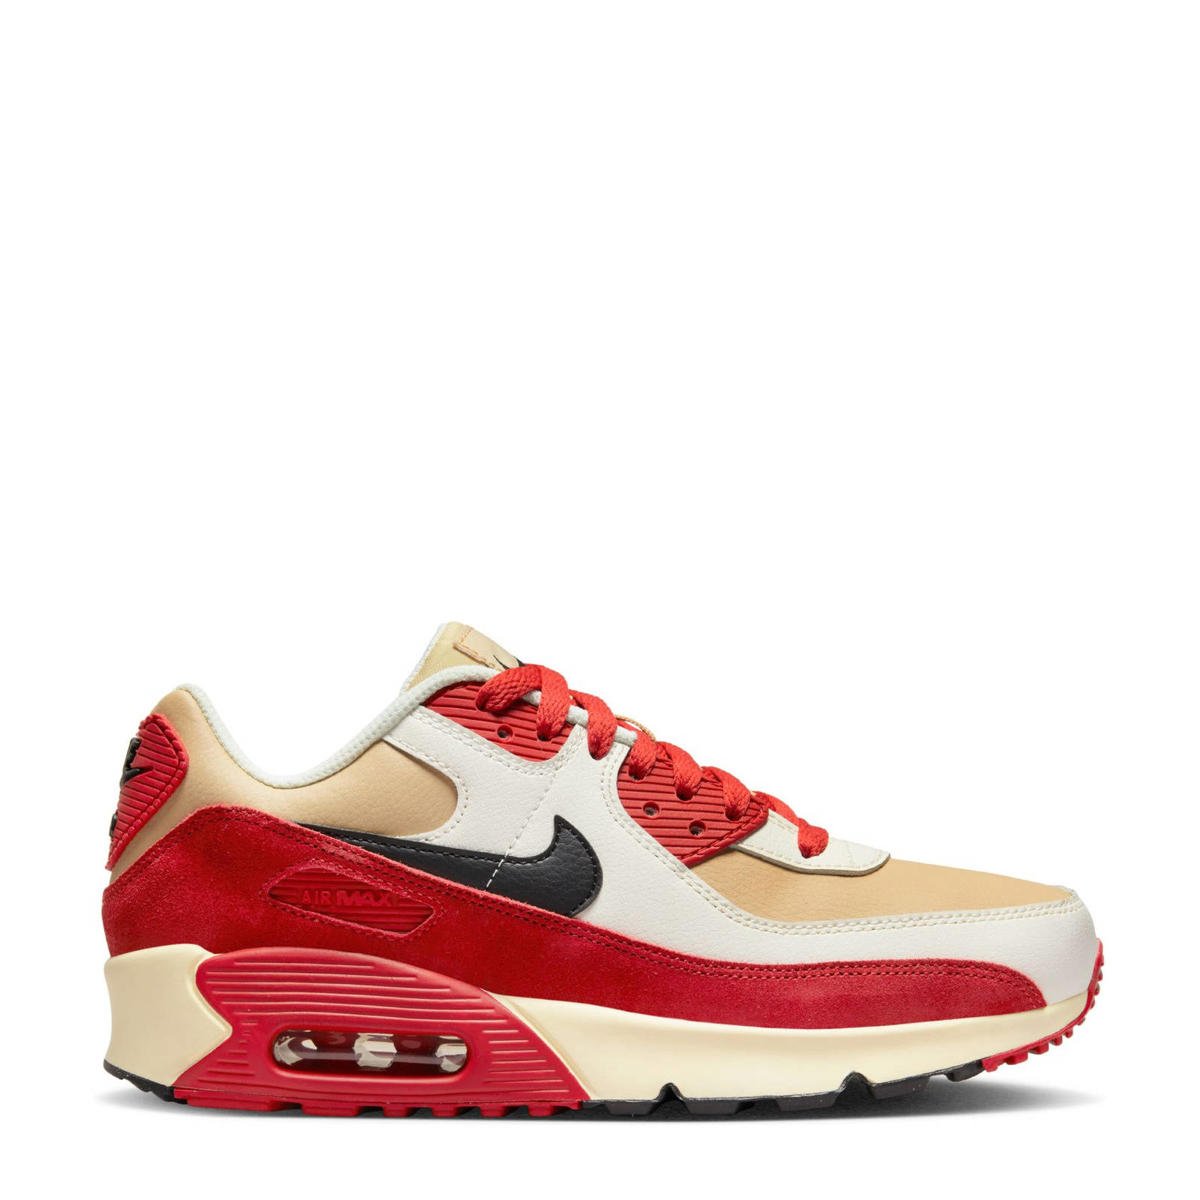 rollen Grammatica attent Nike Air Max 90 sneakers zand/rood/wit | wehkamp